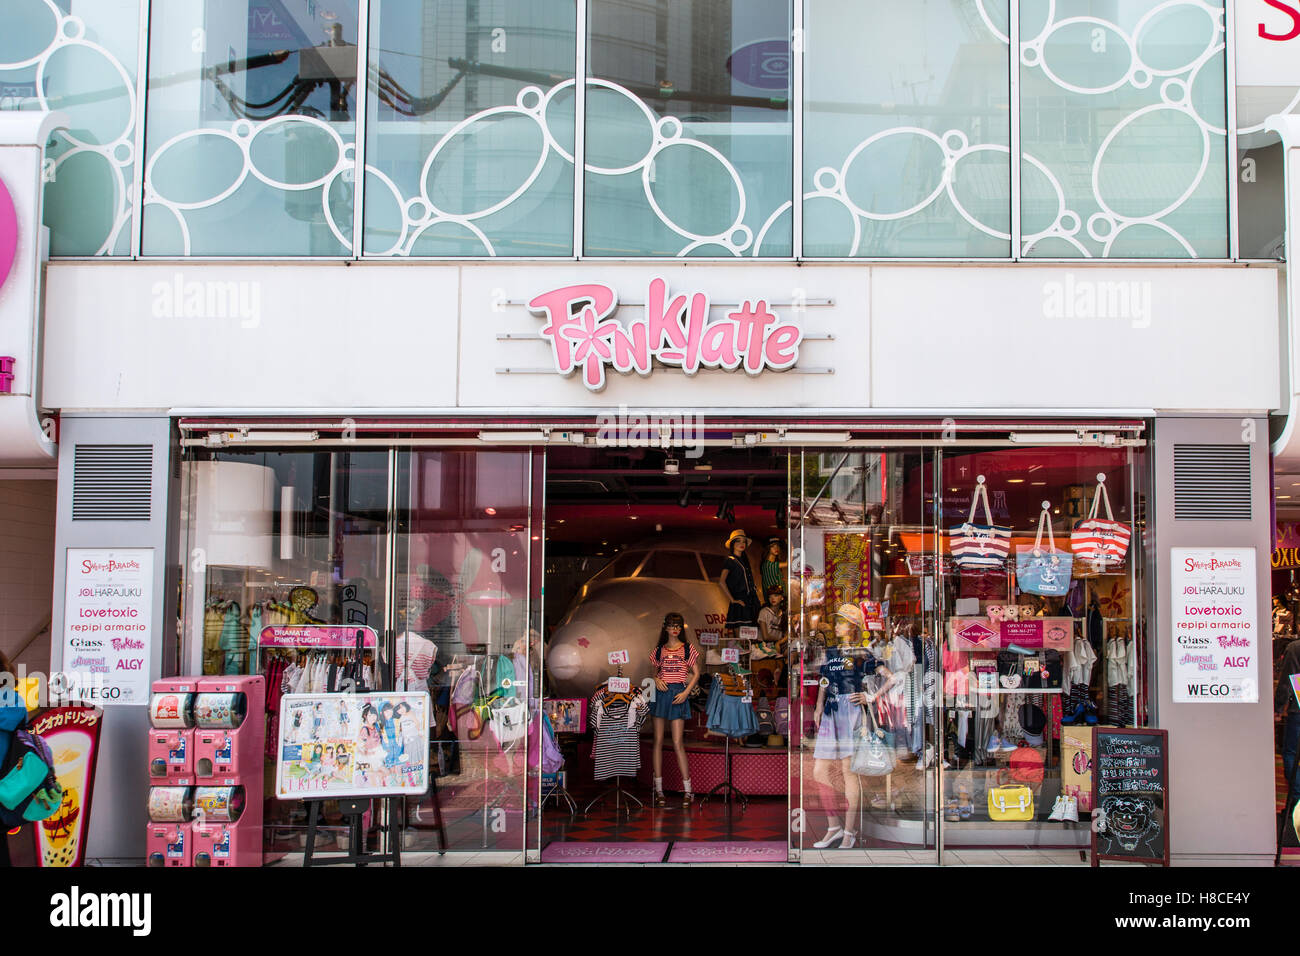 Japan, Tokyo, Harajuku, Takeshita-dori. Pinklatte teenage 'Harajuku style' fashionable boutique store. Shop front with window display and name logo. Stock Photo